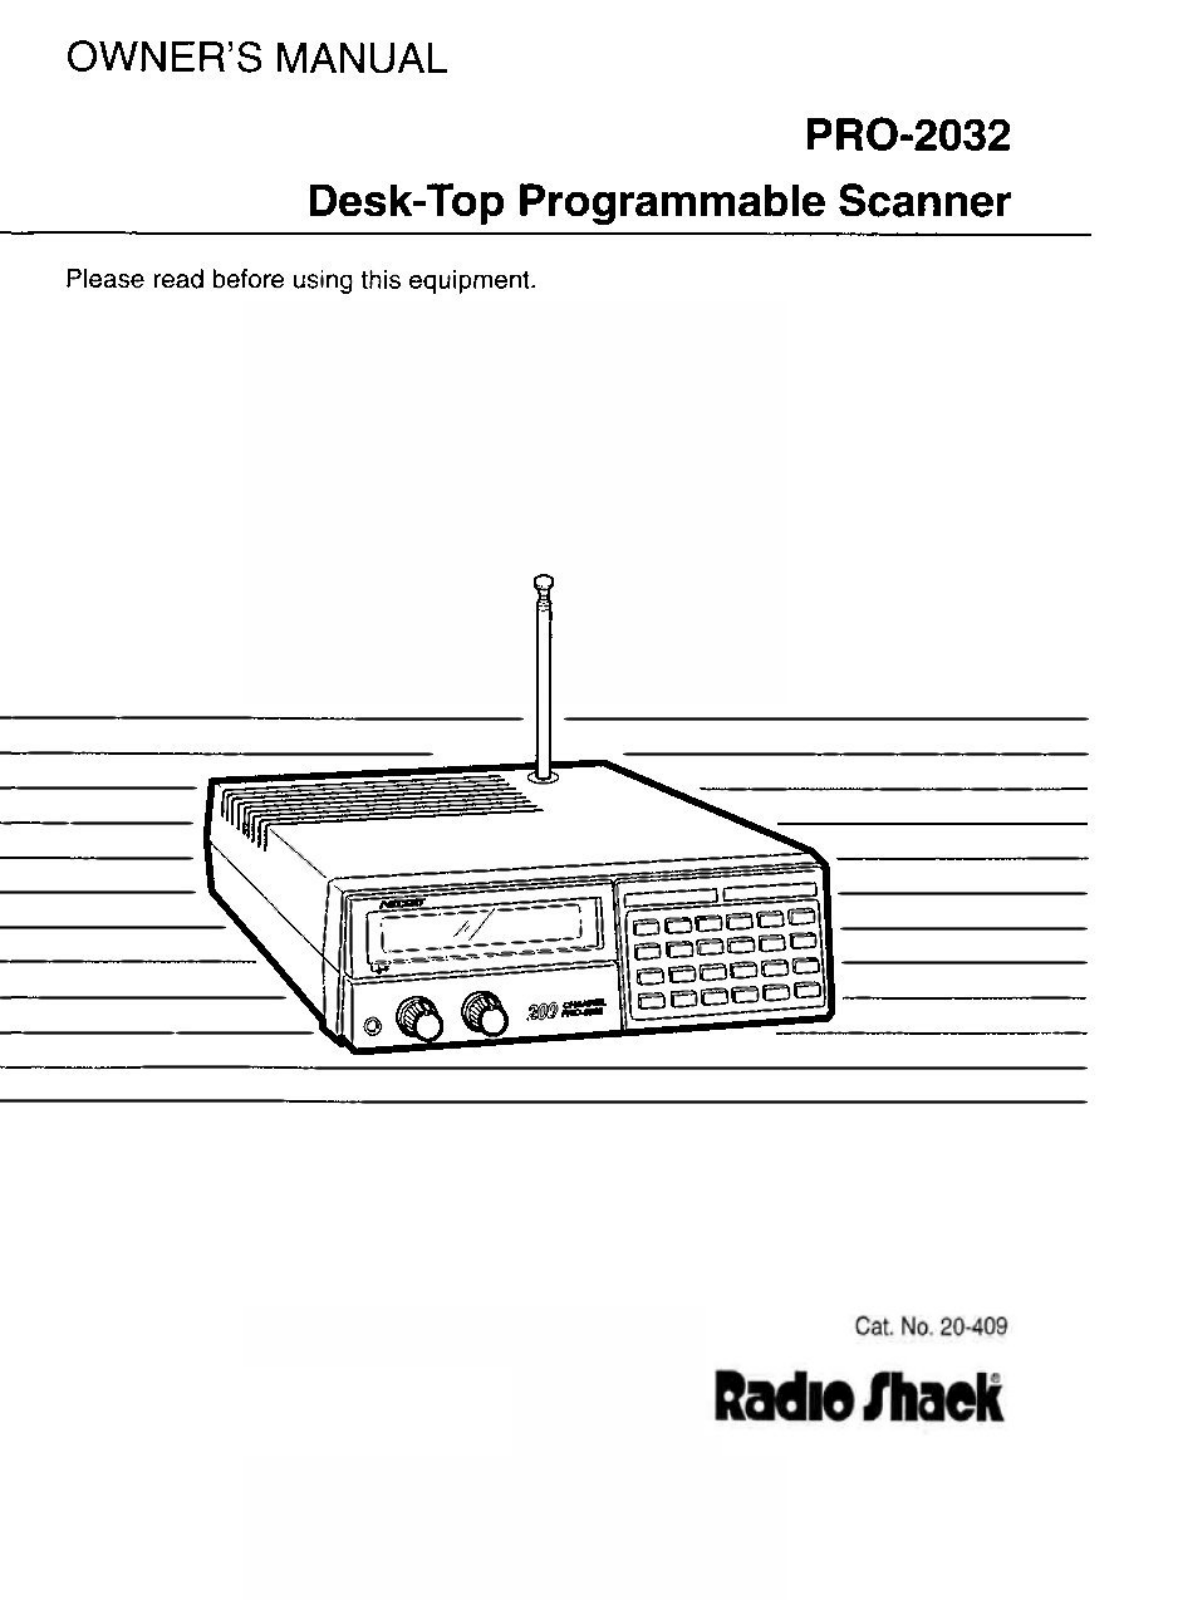 Radio Shack Pro-2032 User Manual